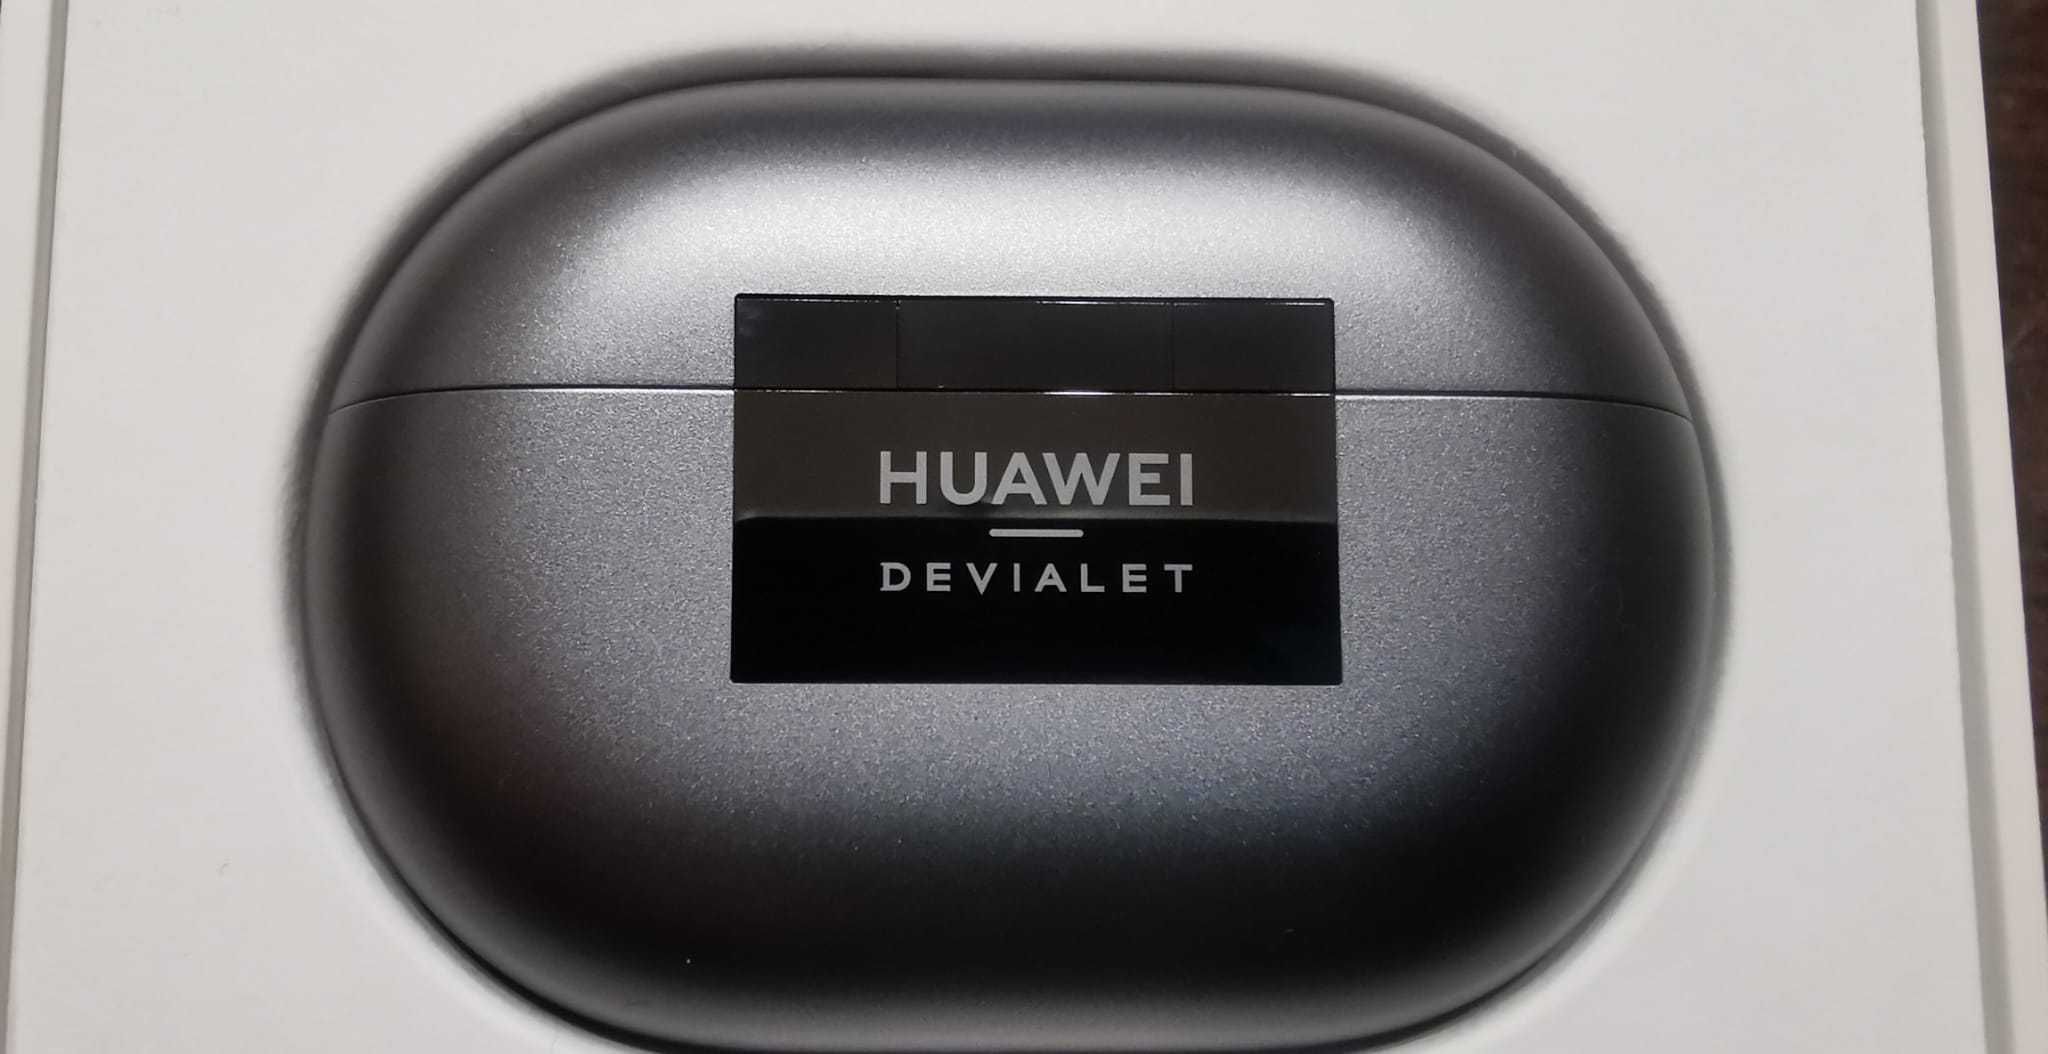 Huawei Freebuds Pro 2